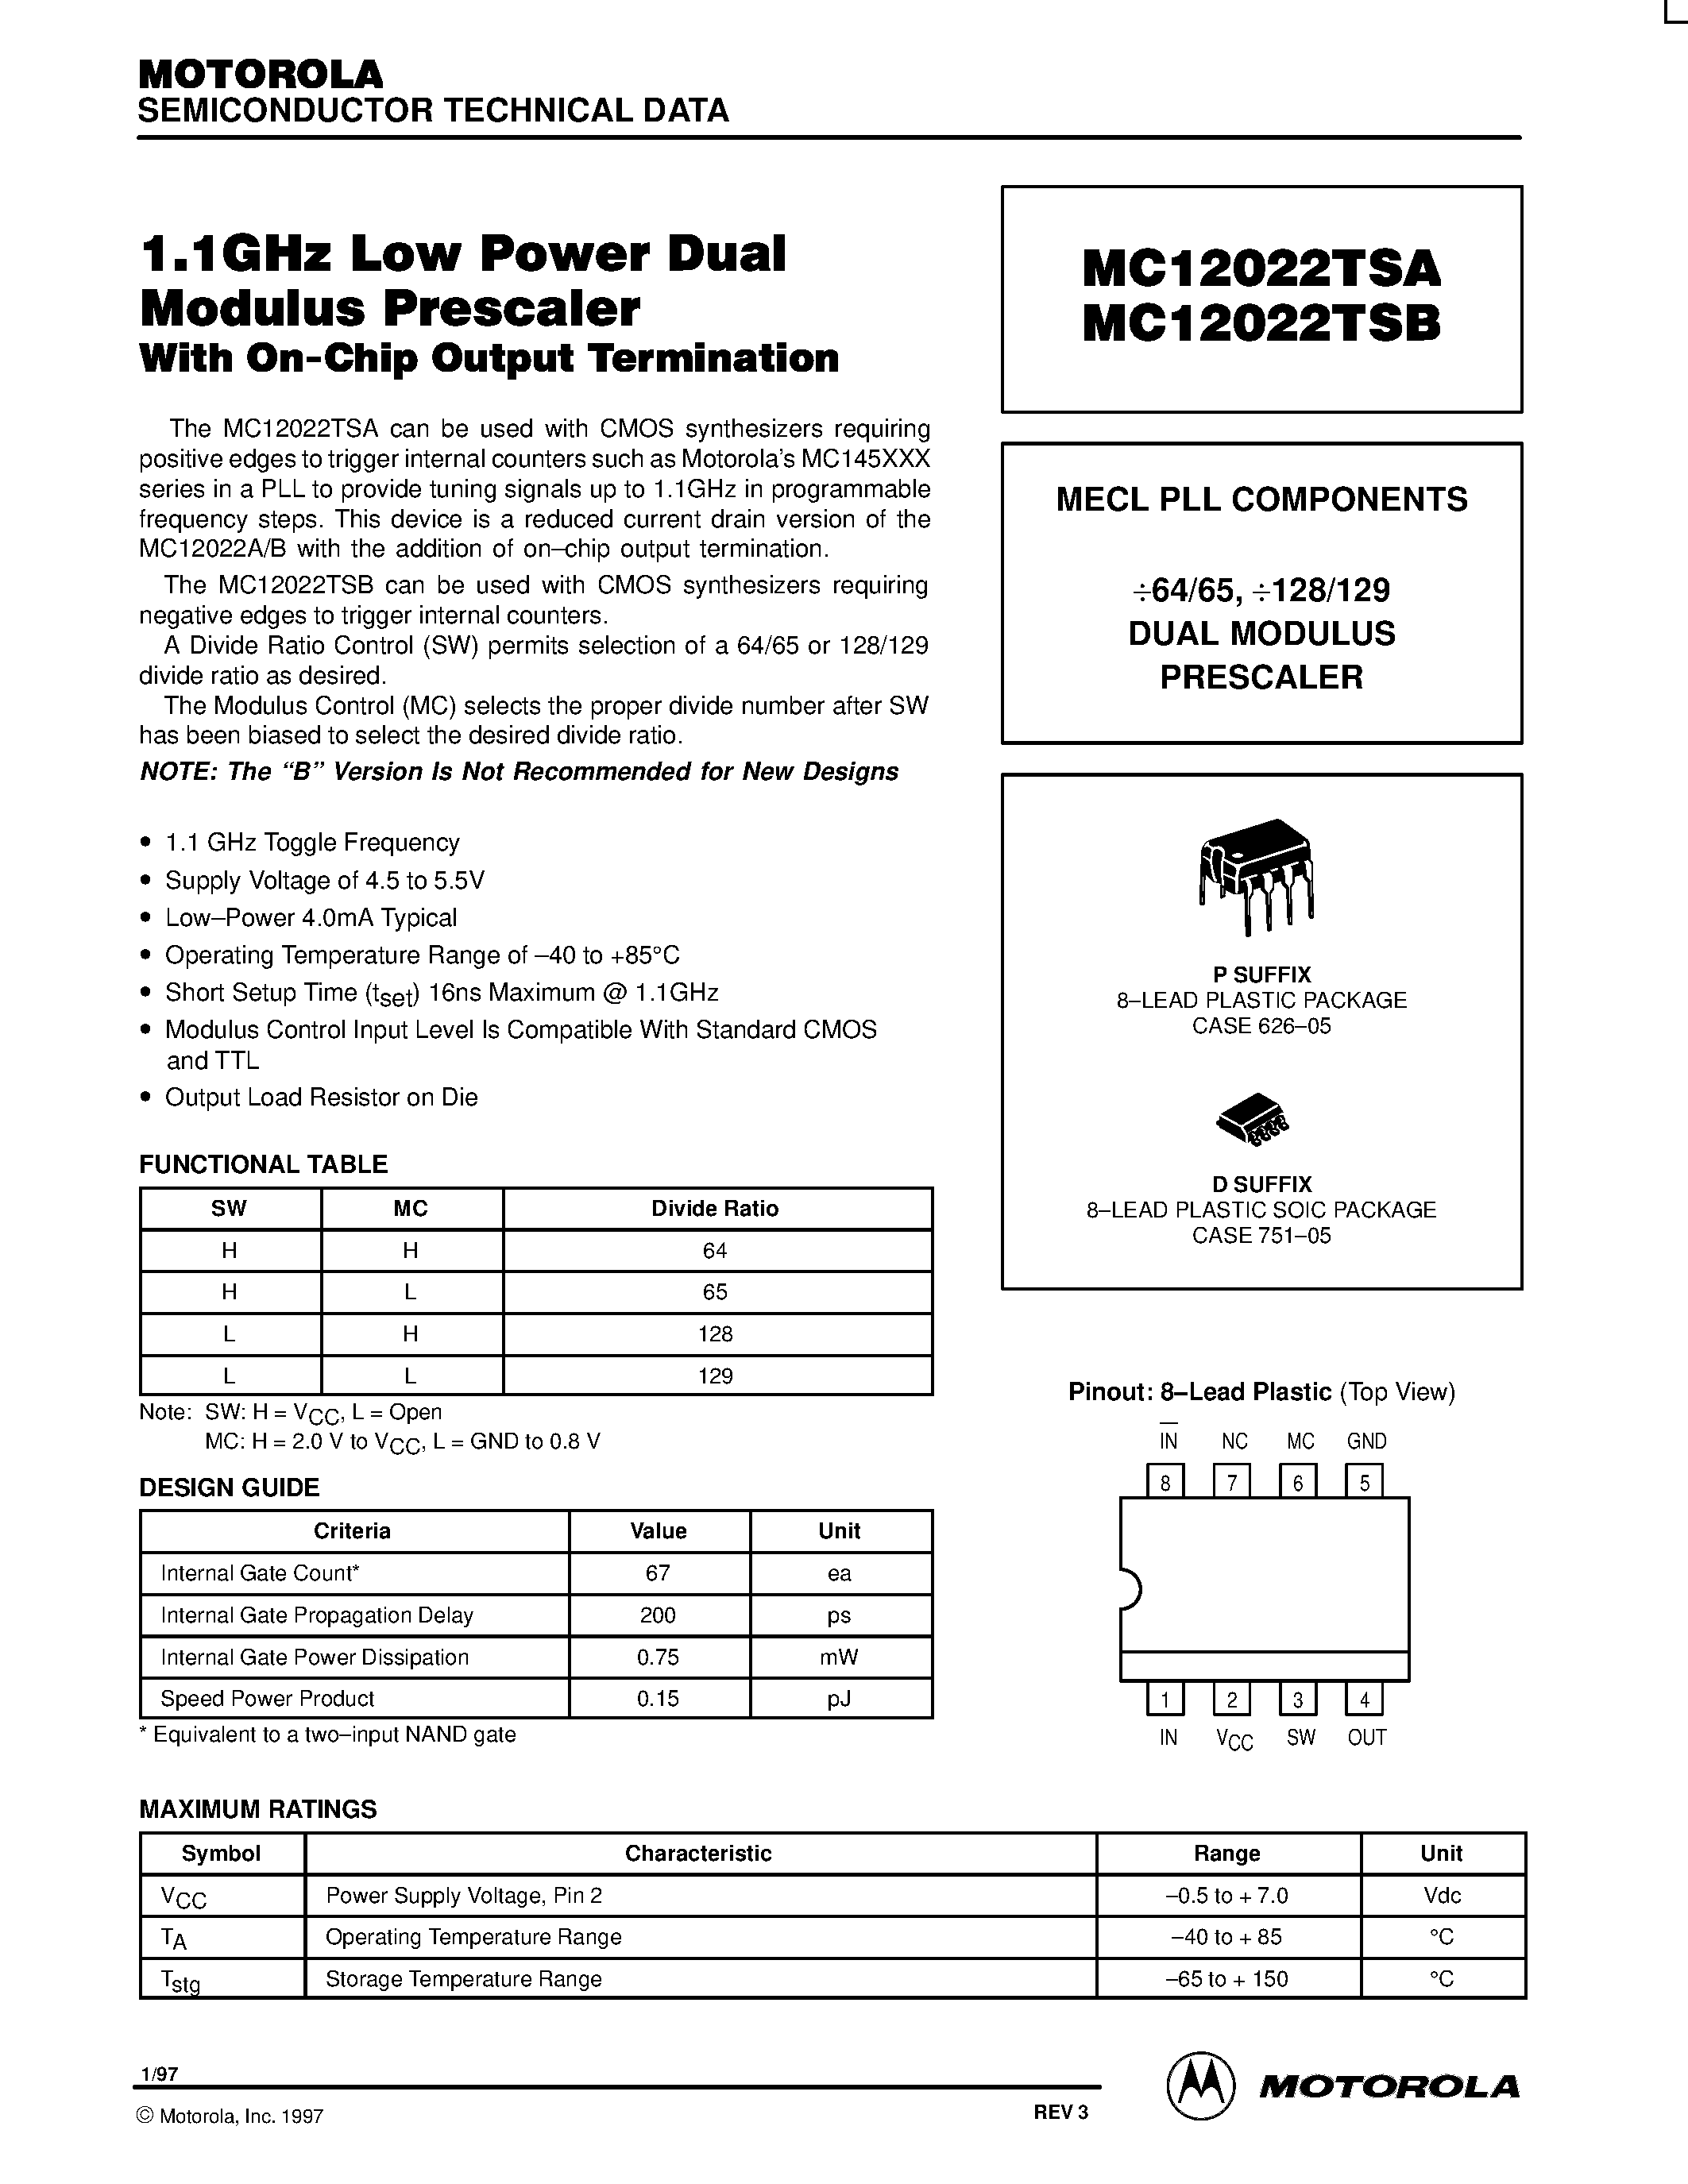 Datasheet MC12022TSAD - MECL PLL COMPONENTS 64/65 / 128/129 DUAL MODULUS PRESCALE page 1